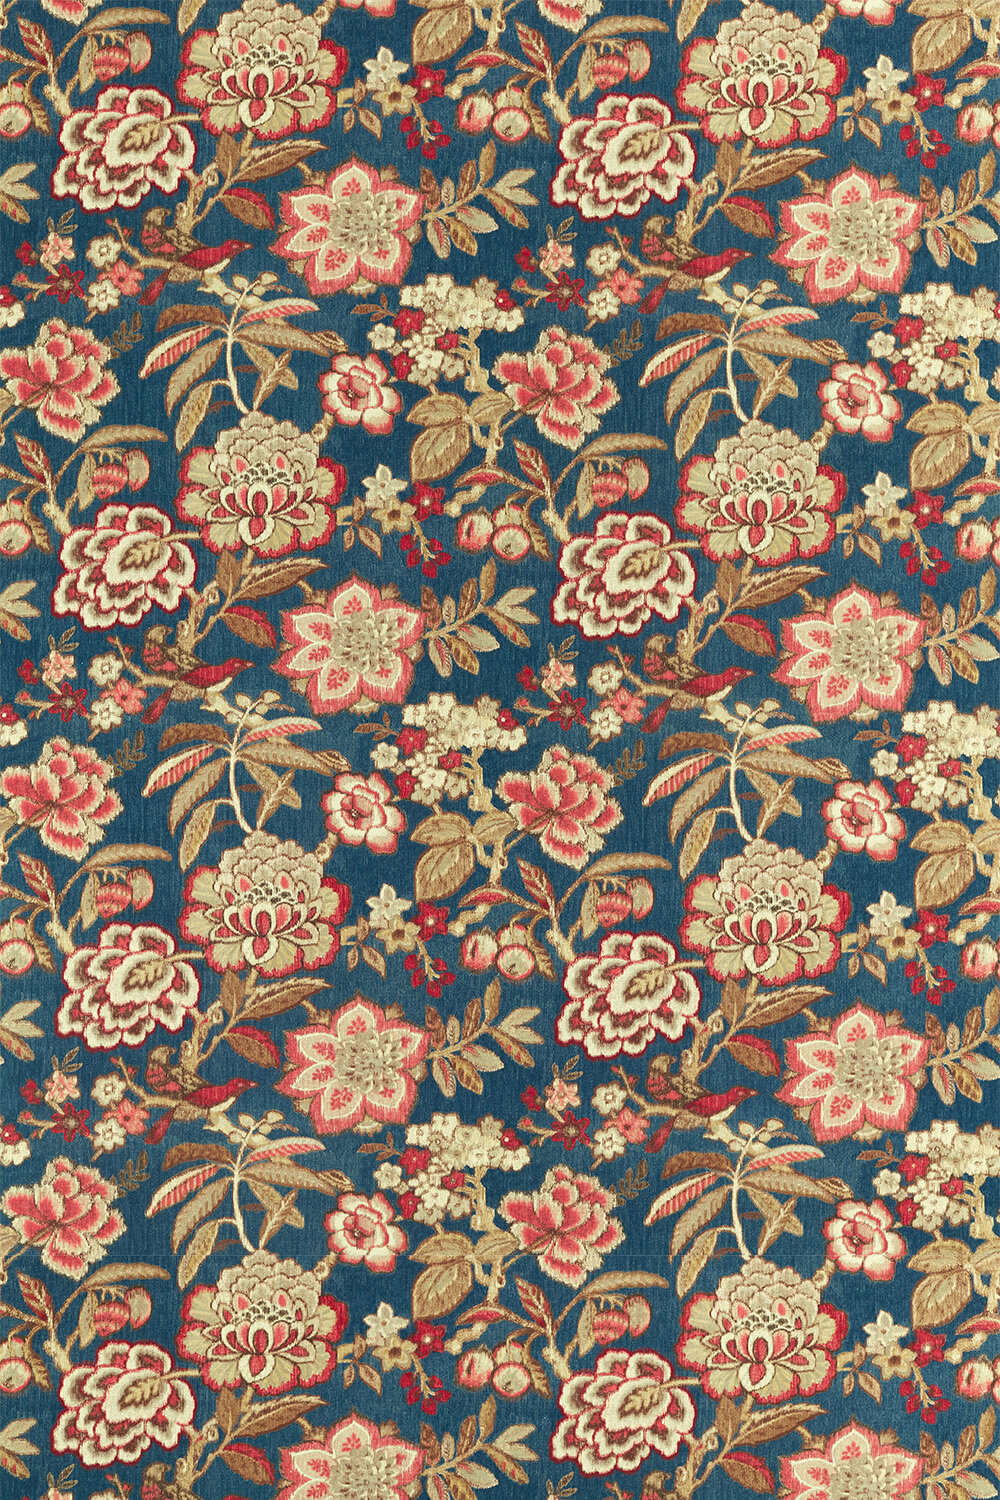 Indra Flower Fabric - Indigo/ Cherry - by Sanderson